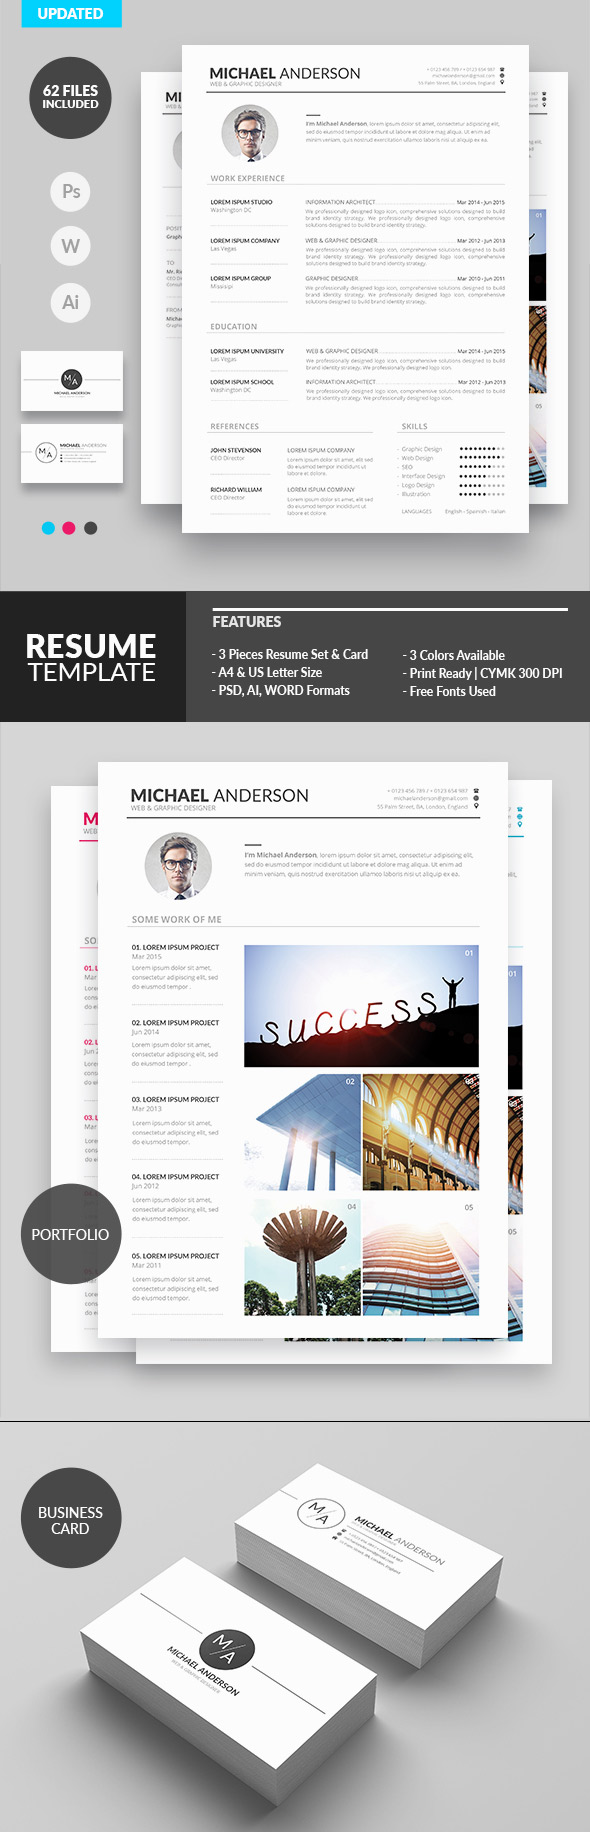 Minimal Resume Design for Creatives